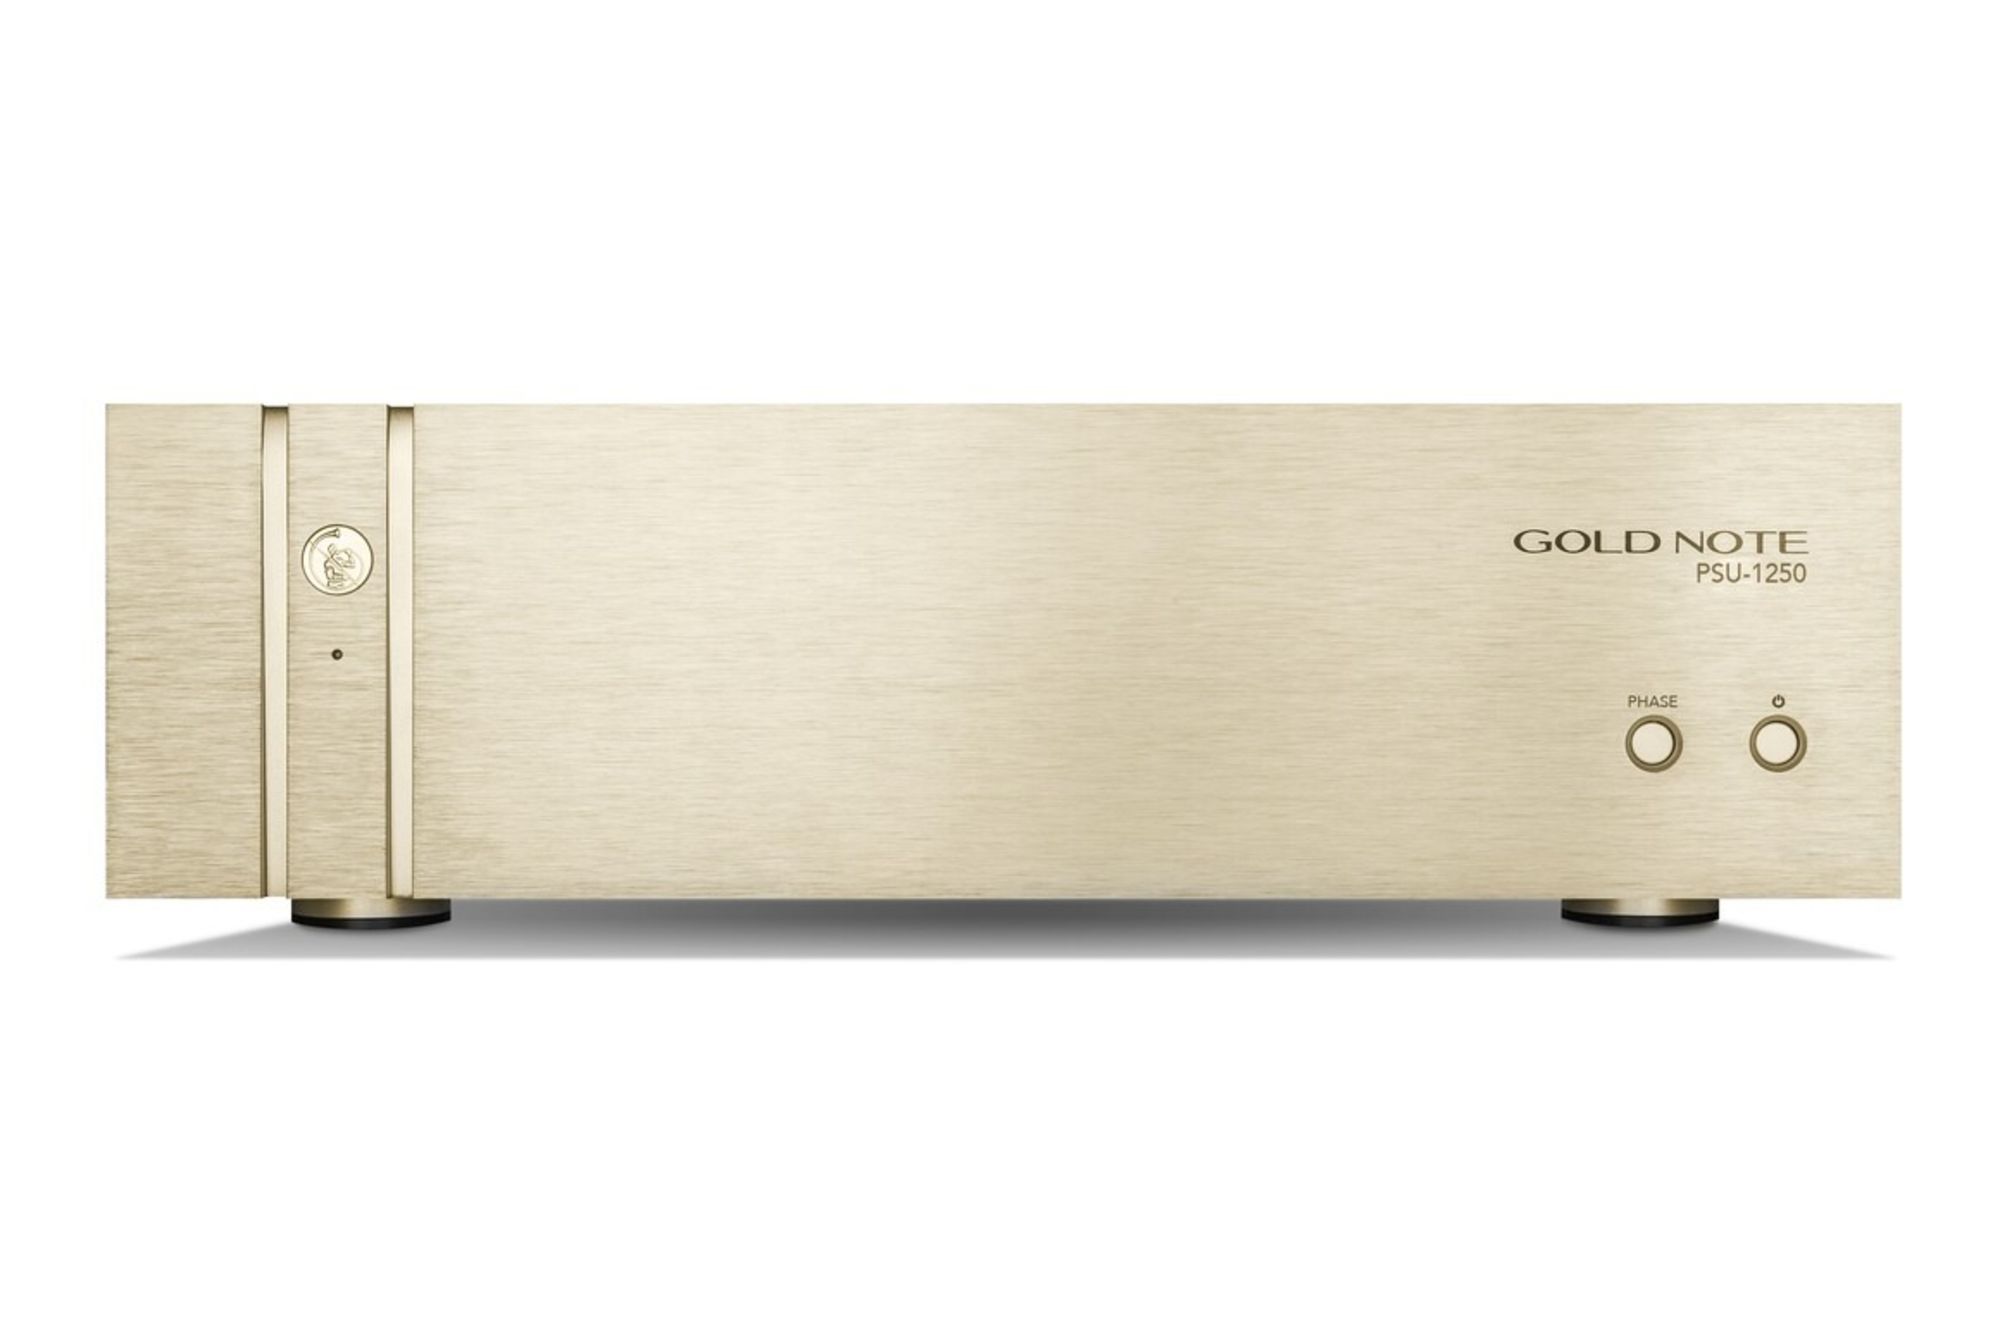 Блоки питания Gold Note PSU-1000 gold mypads для huawei p9 lite g9 dual sim lte 5 2 gold